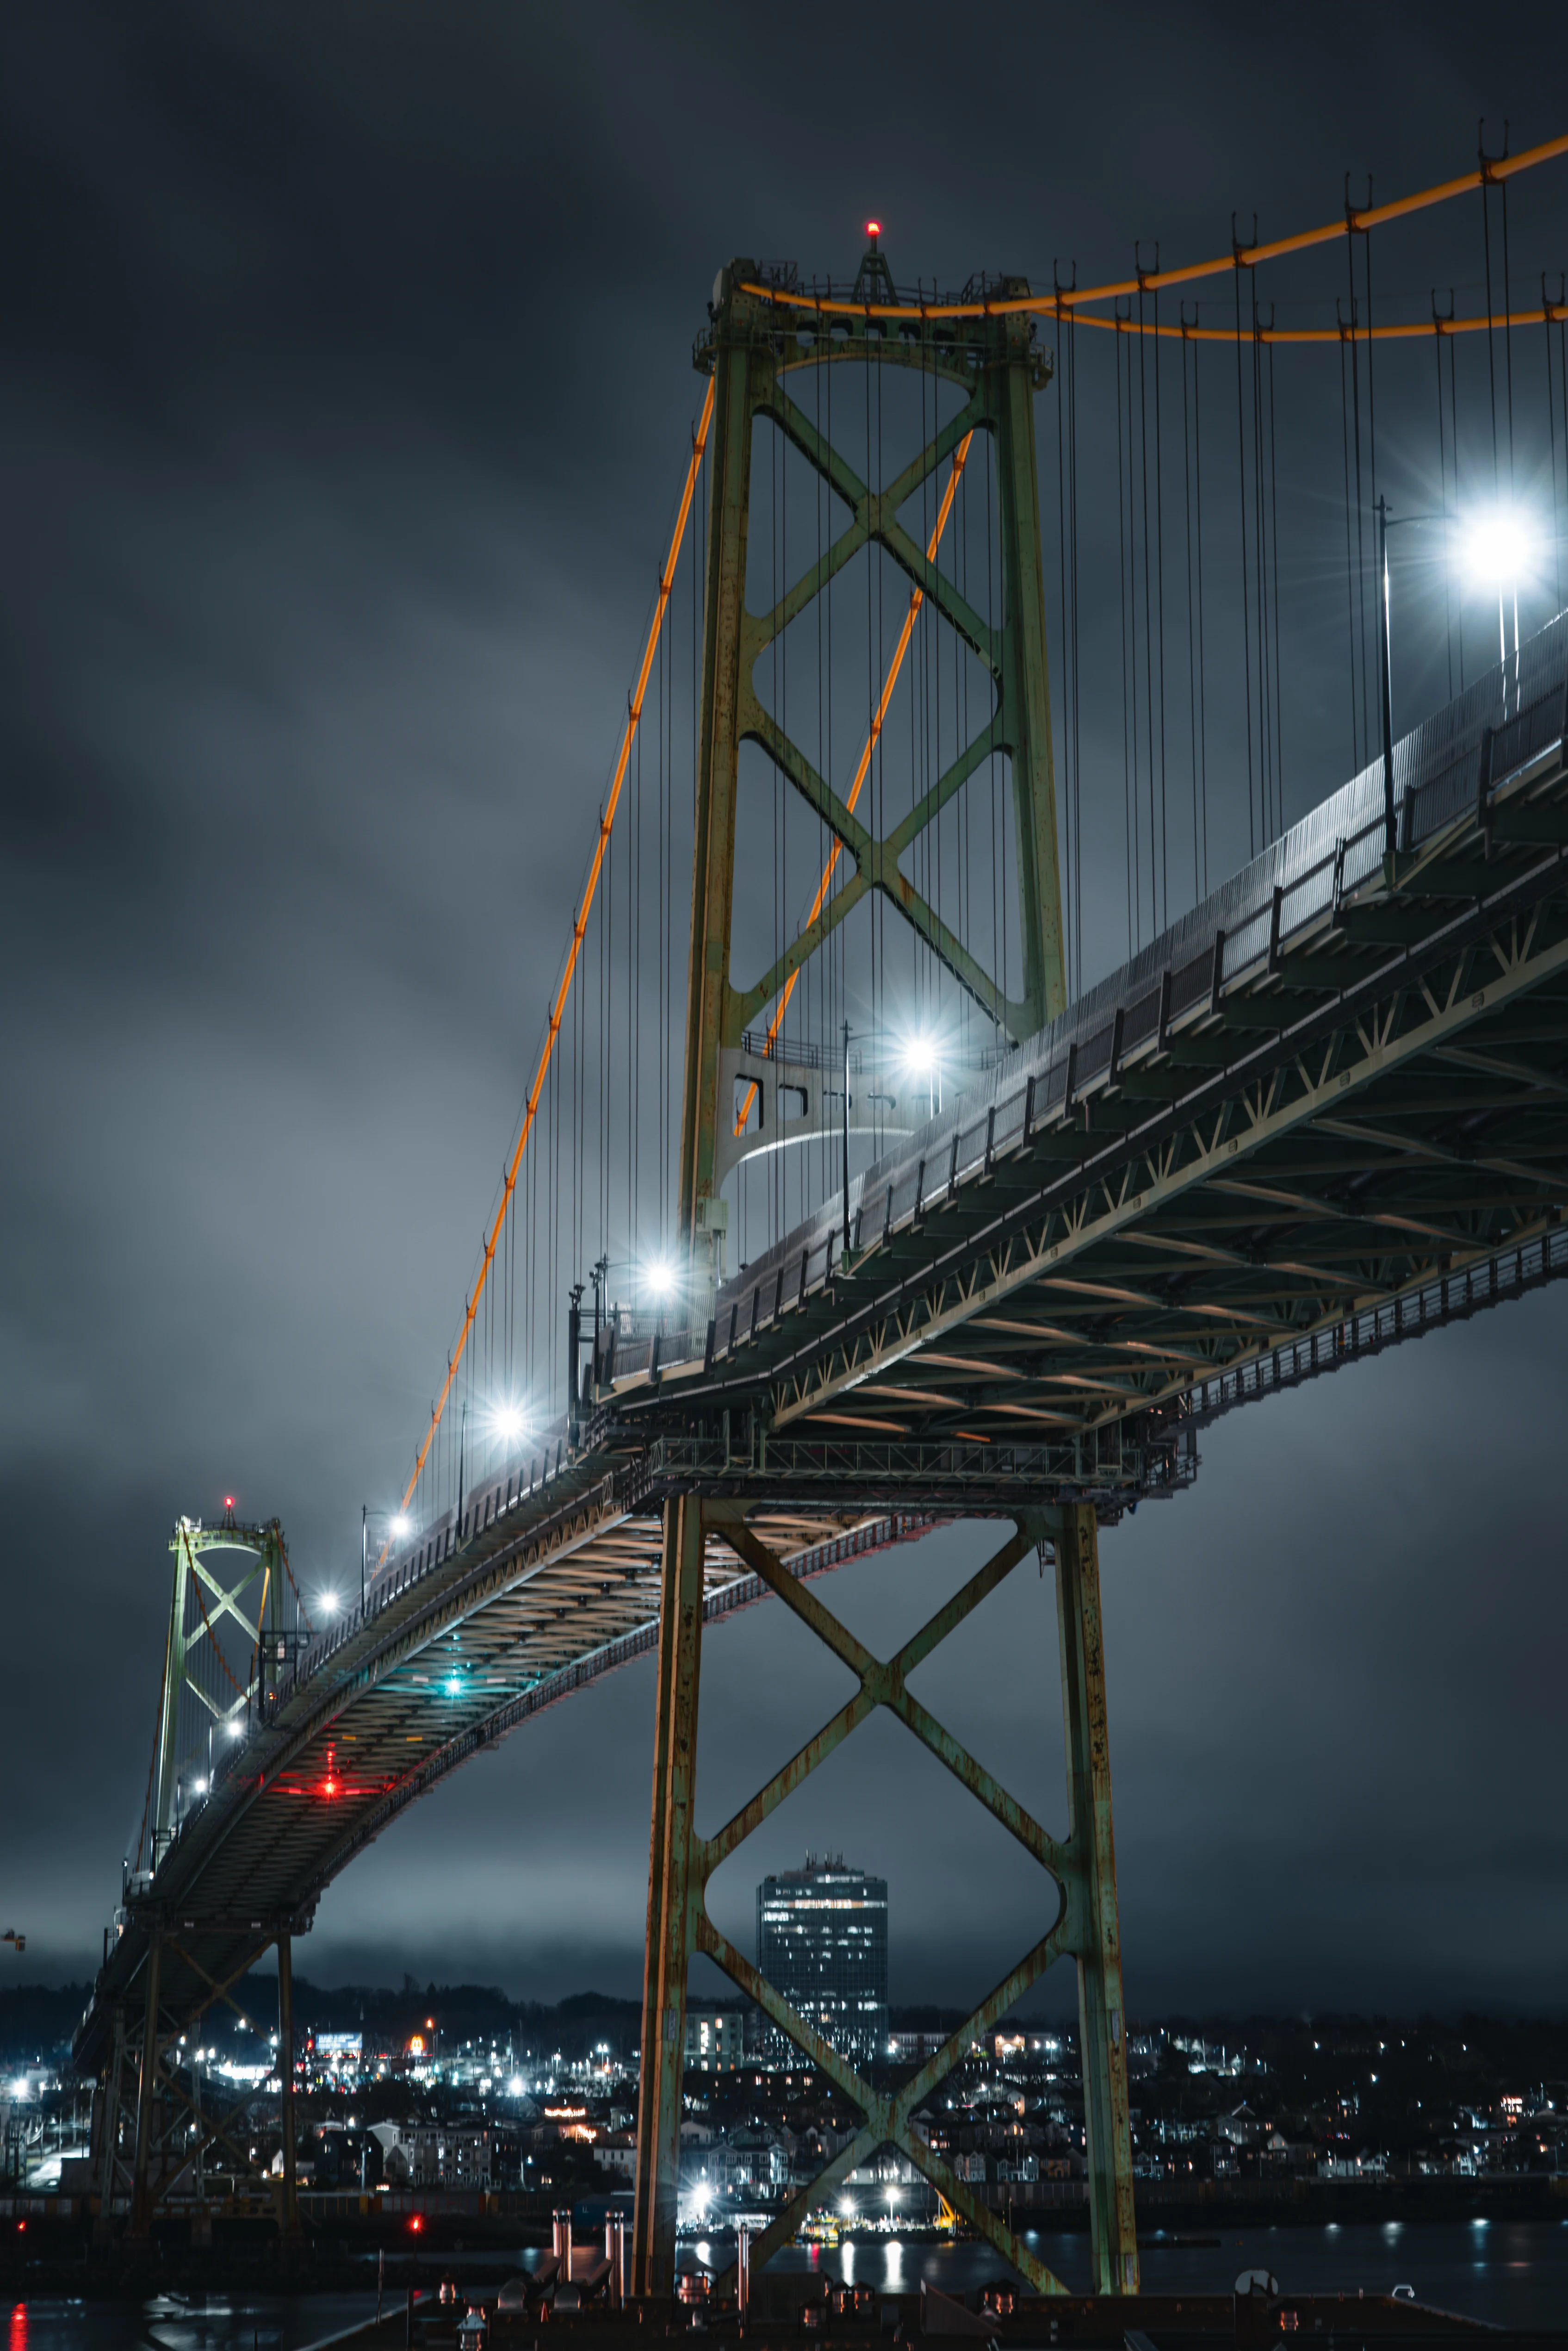 Macdonald Bridge at Night